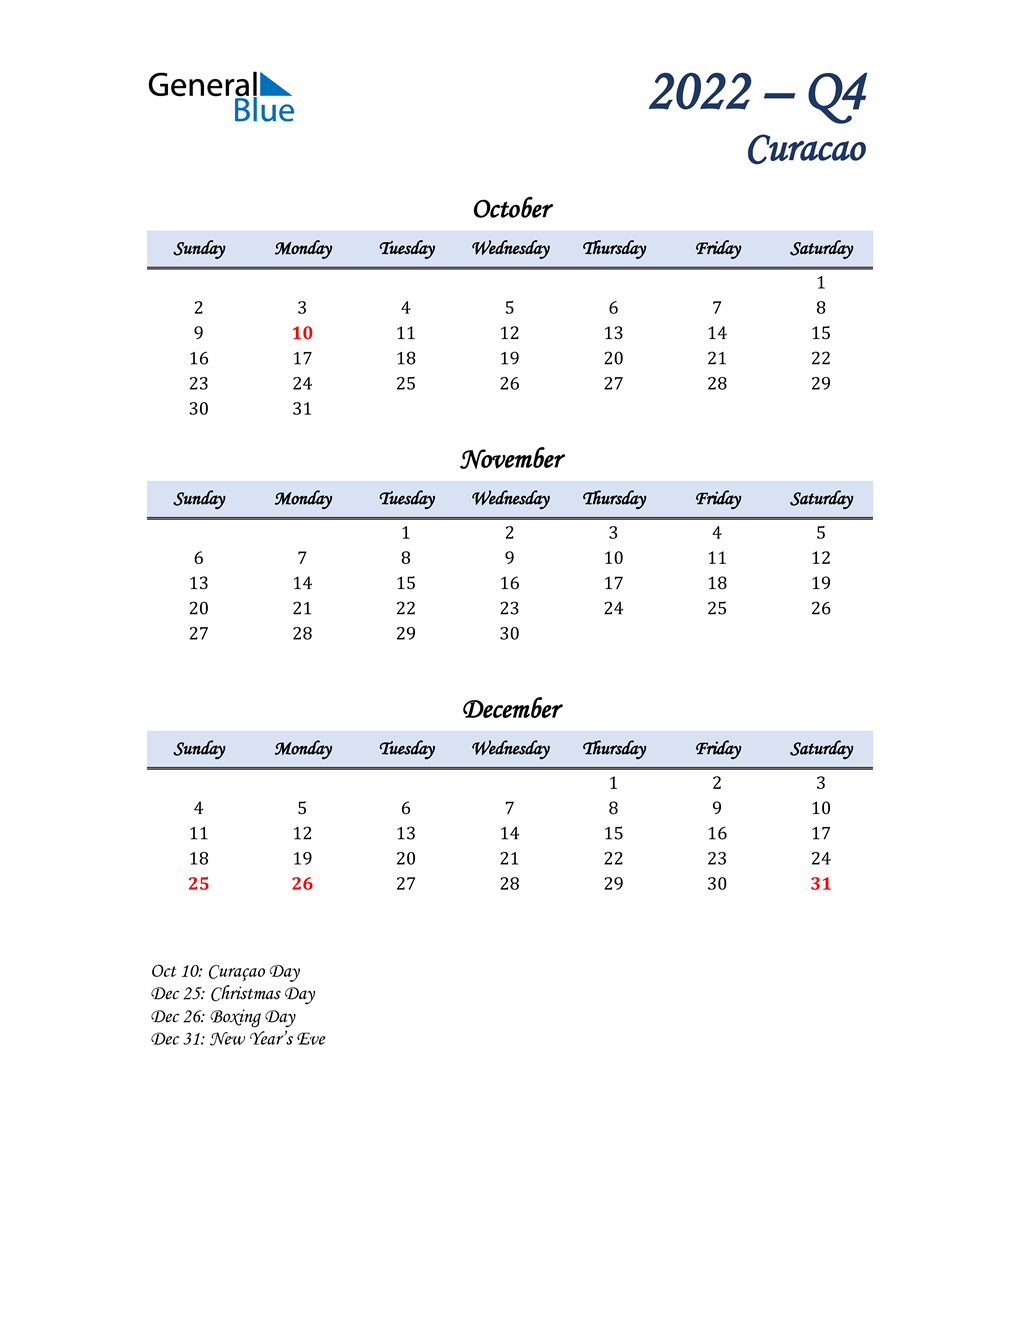  October, November, and December Calendar for Curacao